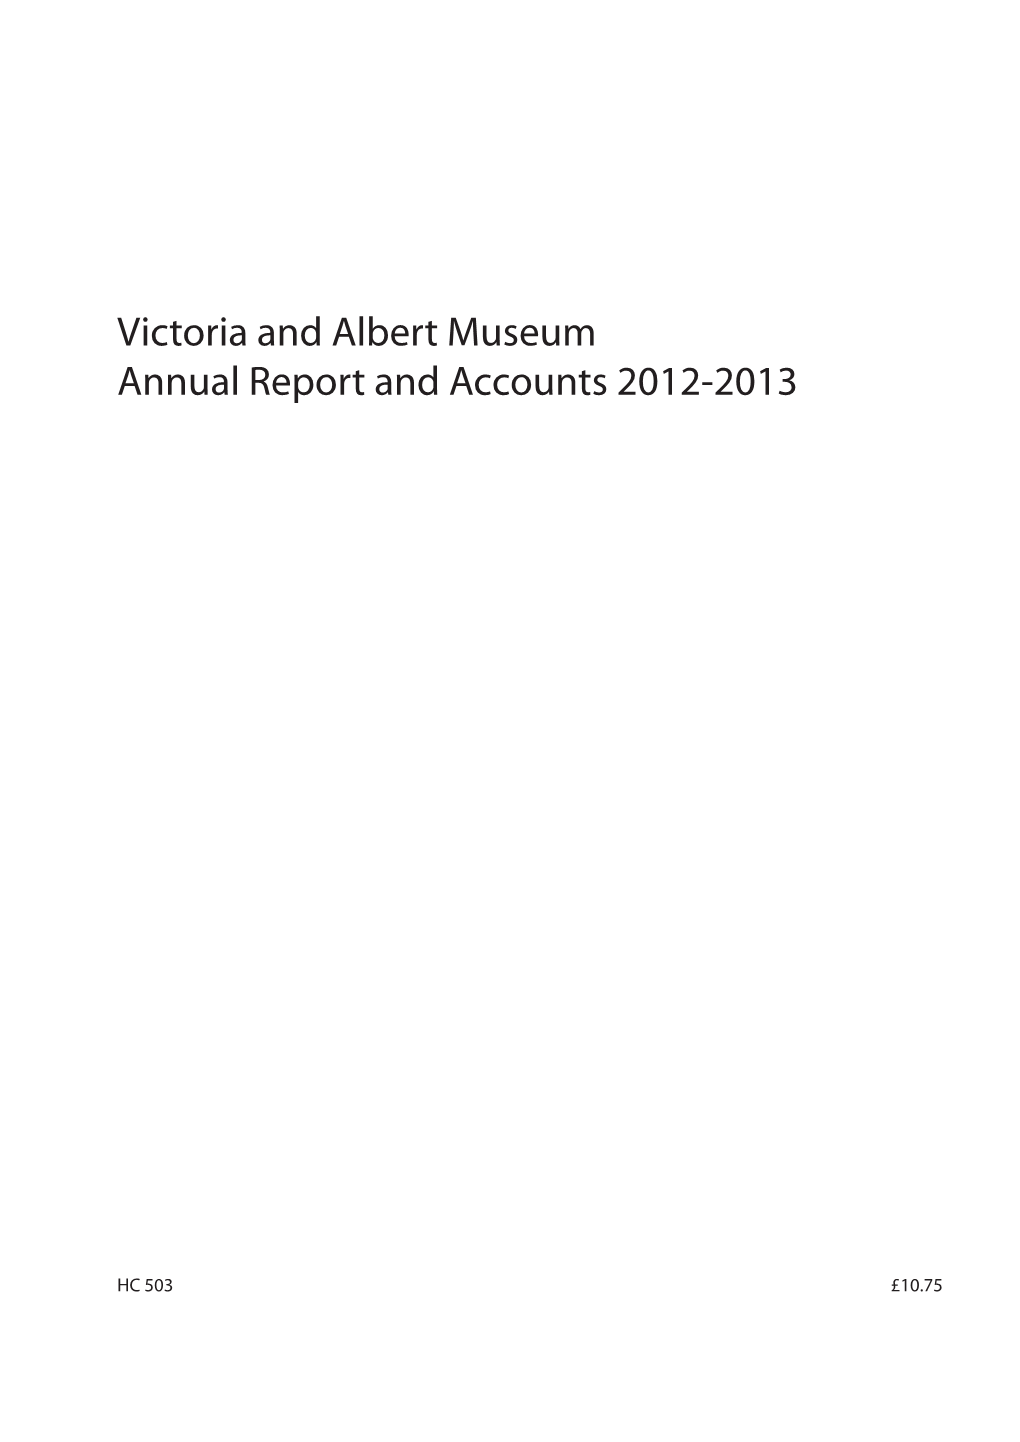 Annual Report & Accounts 2012